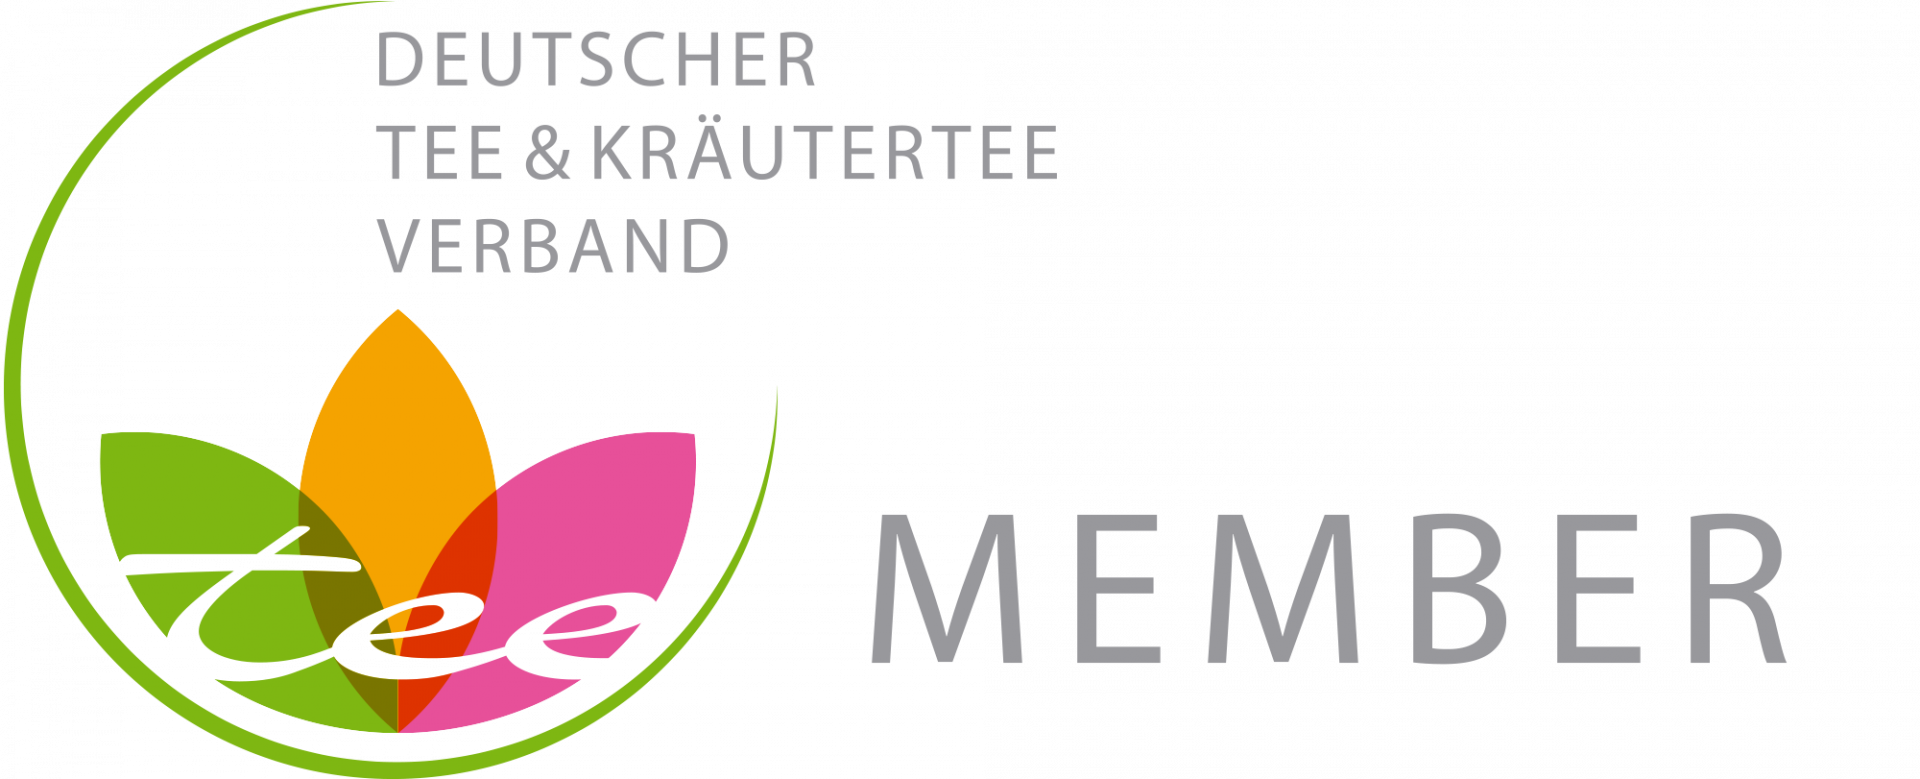 Logo of the German Tea Association